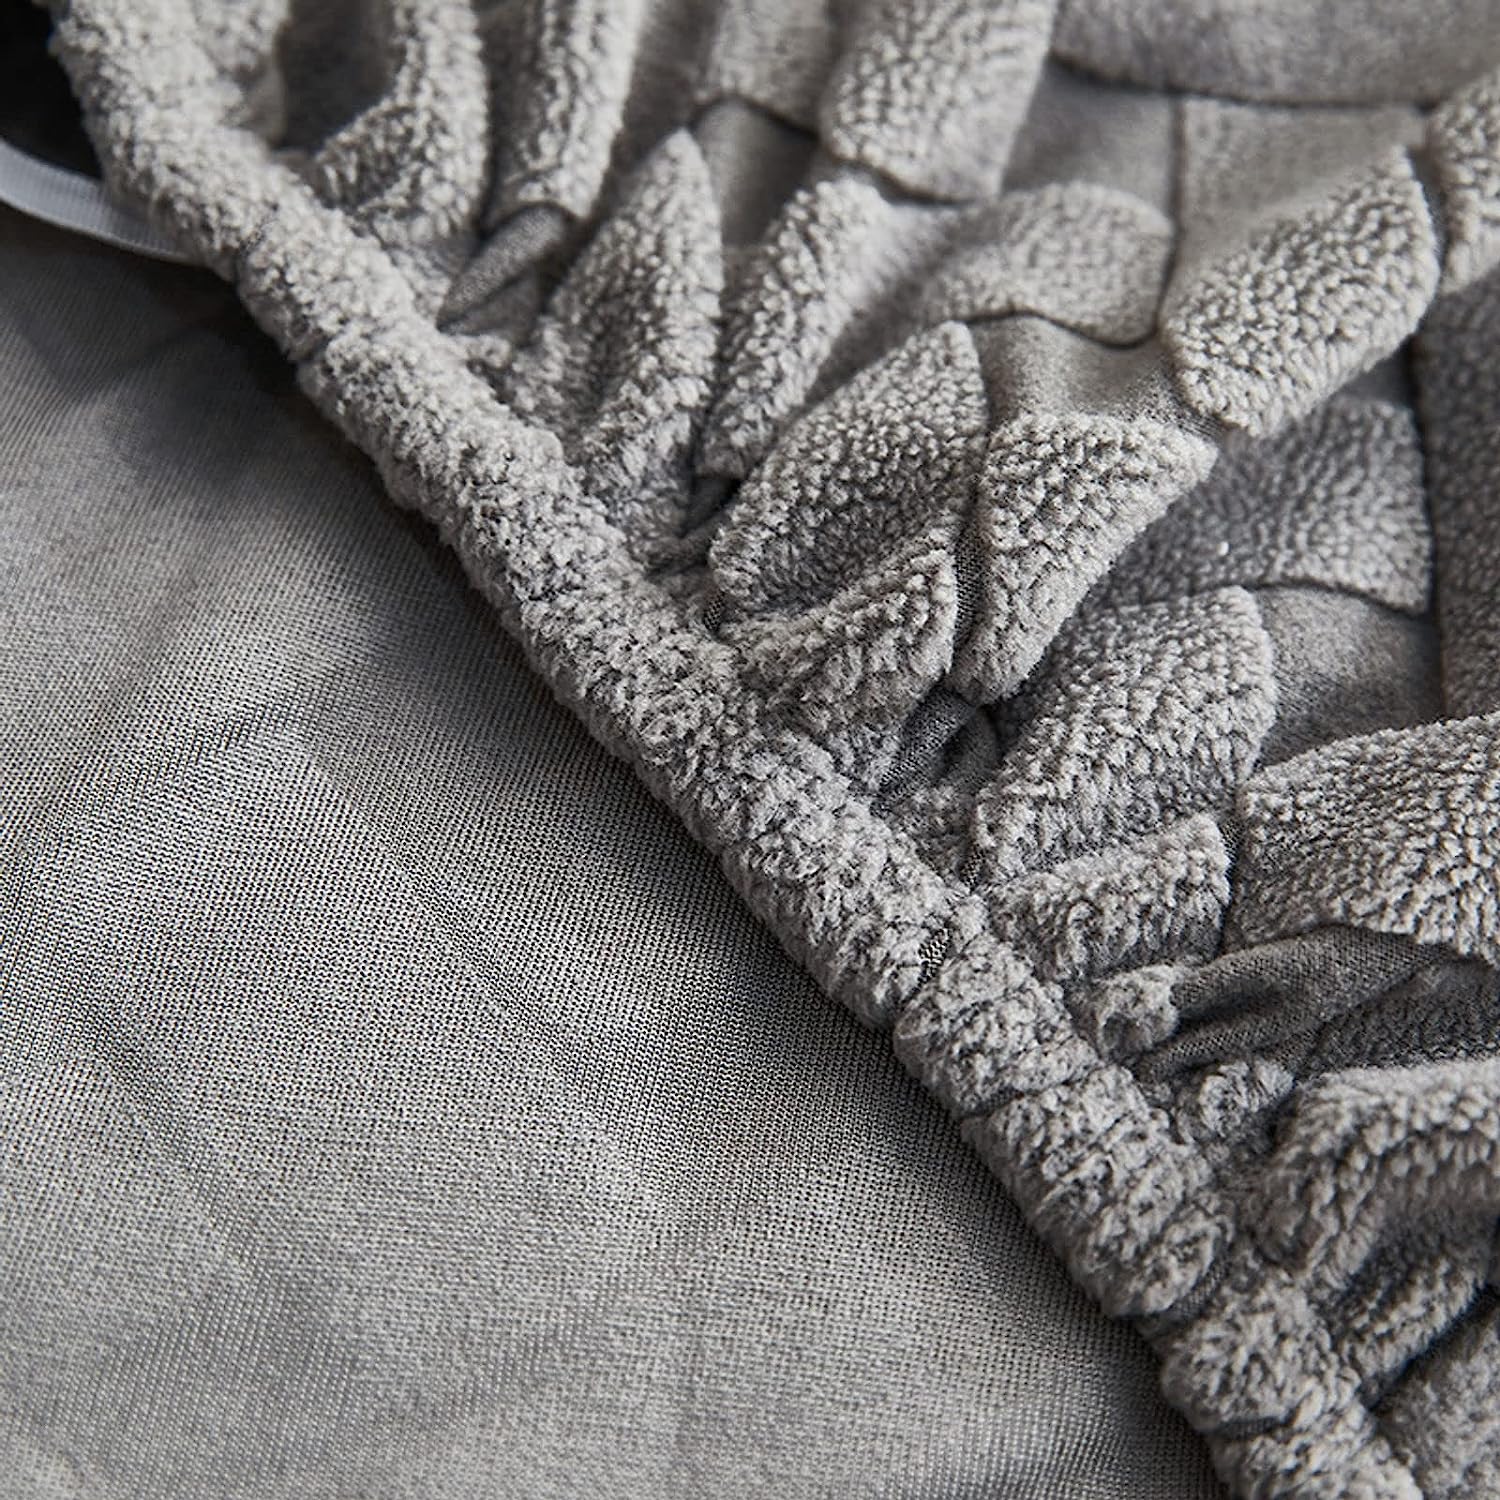 Sofa Cushion Cover - Stone Grey - Soft Elastic Jacquard Weave